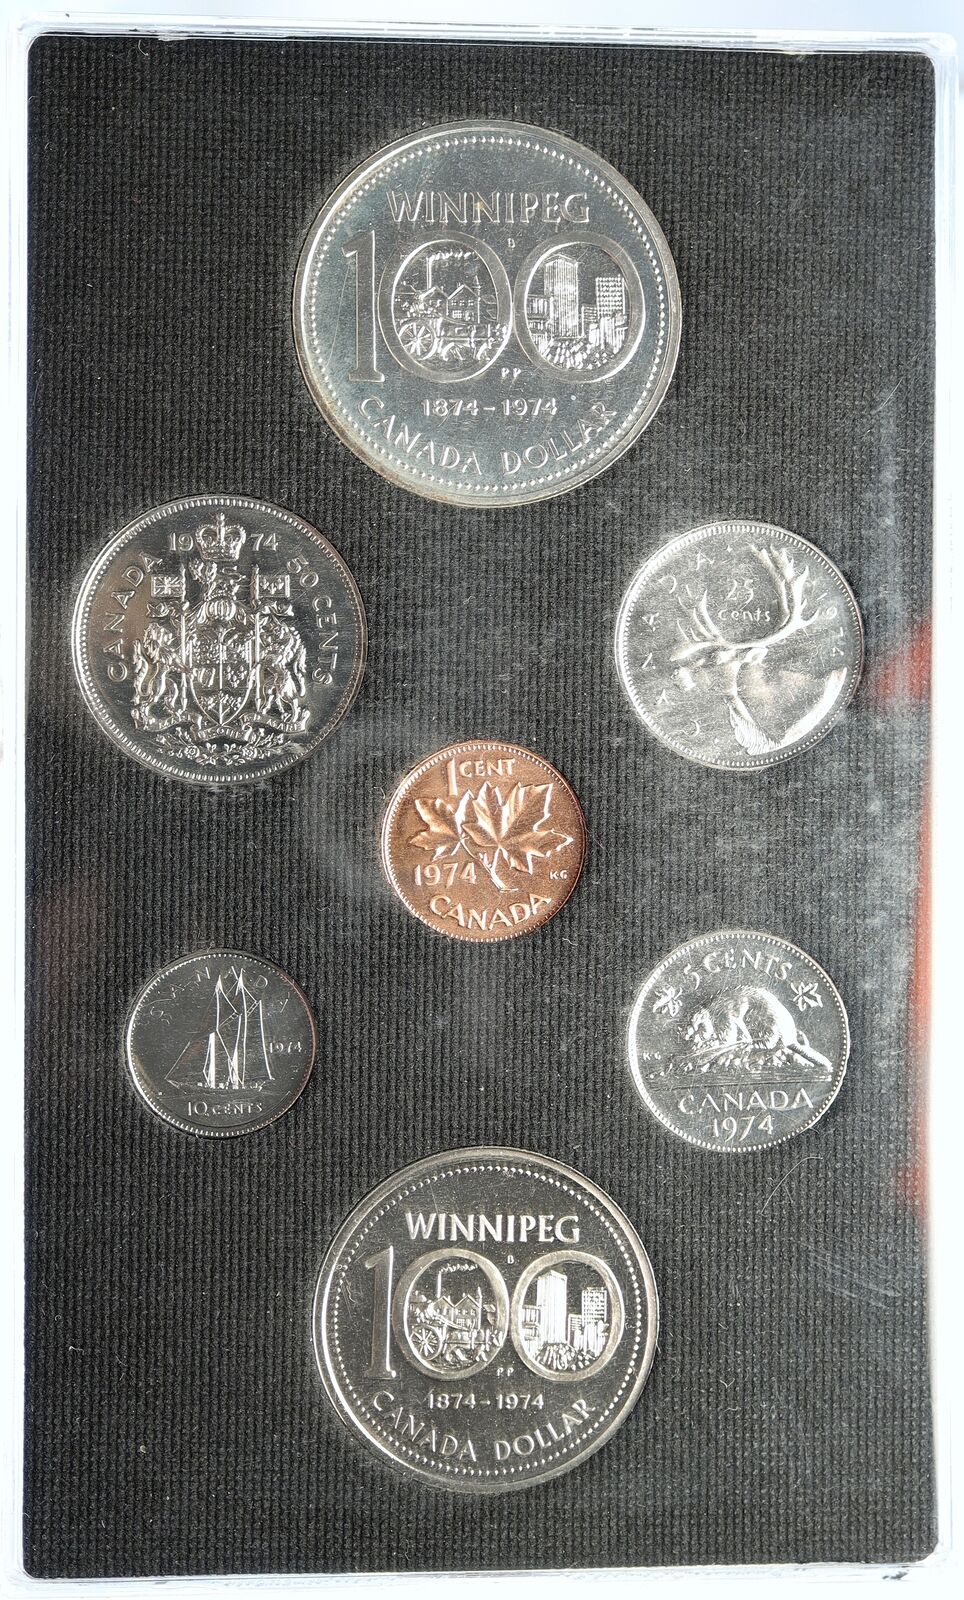 1974 CANADA Queen Elizabeth II Winnipeg 100 Set of 7 Coins - 1 is Silver i112737